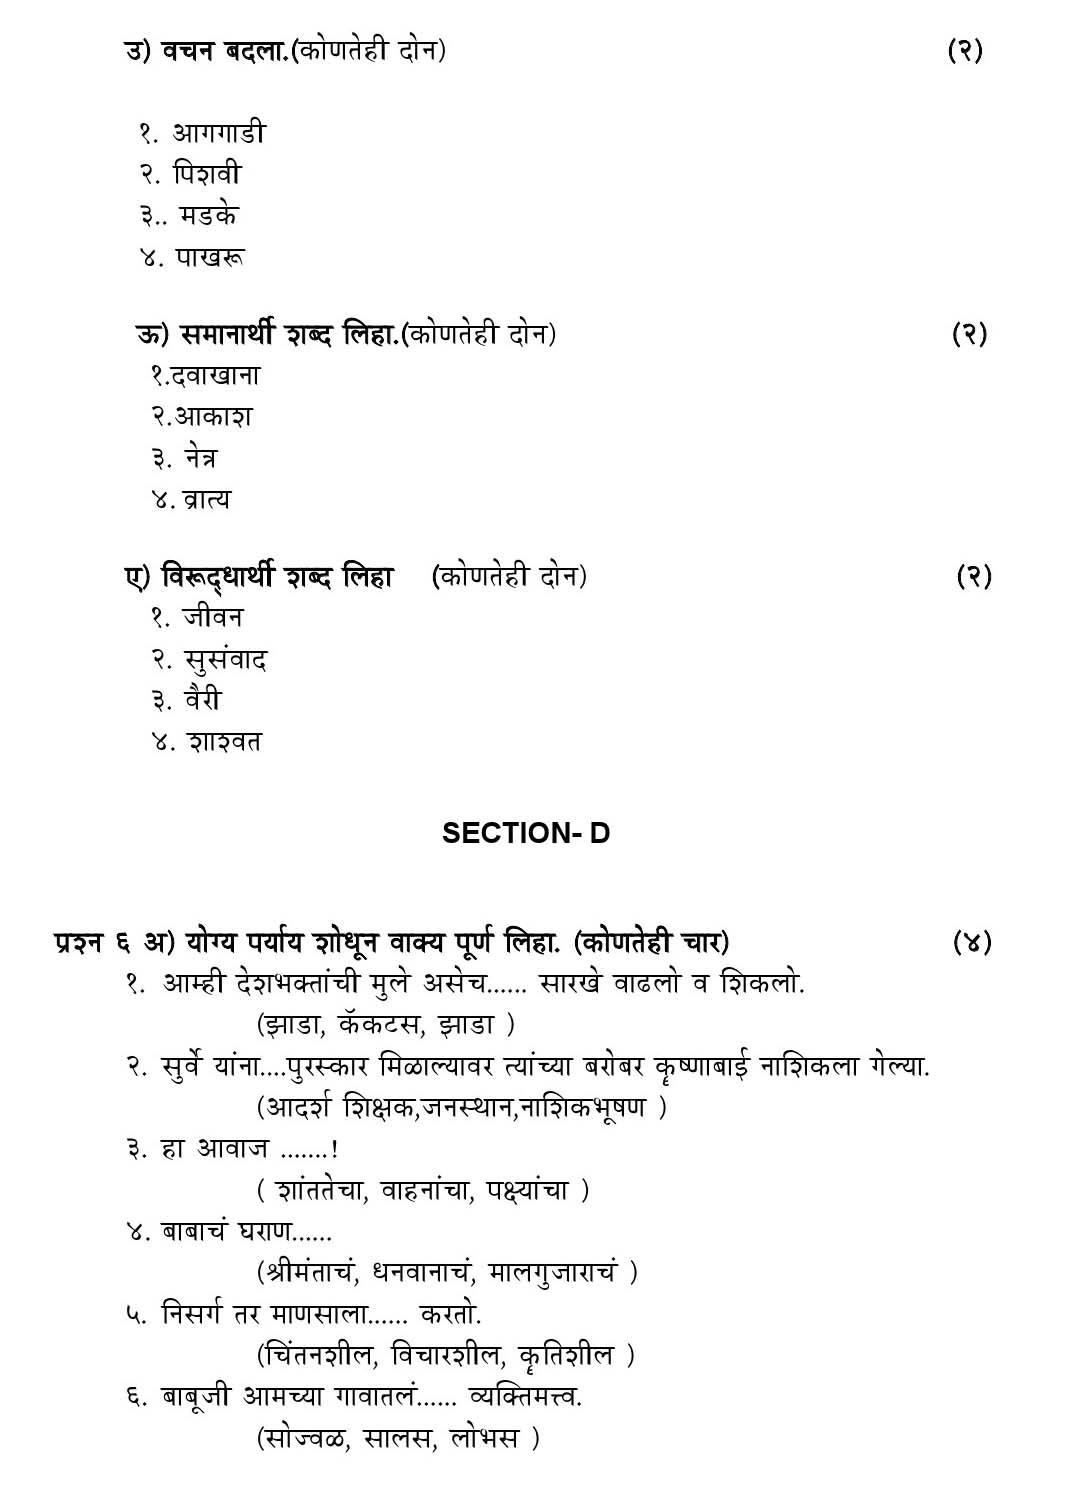 Marathi CBSE Class X Sample Question Paper 2018-19 - Image 5